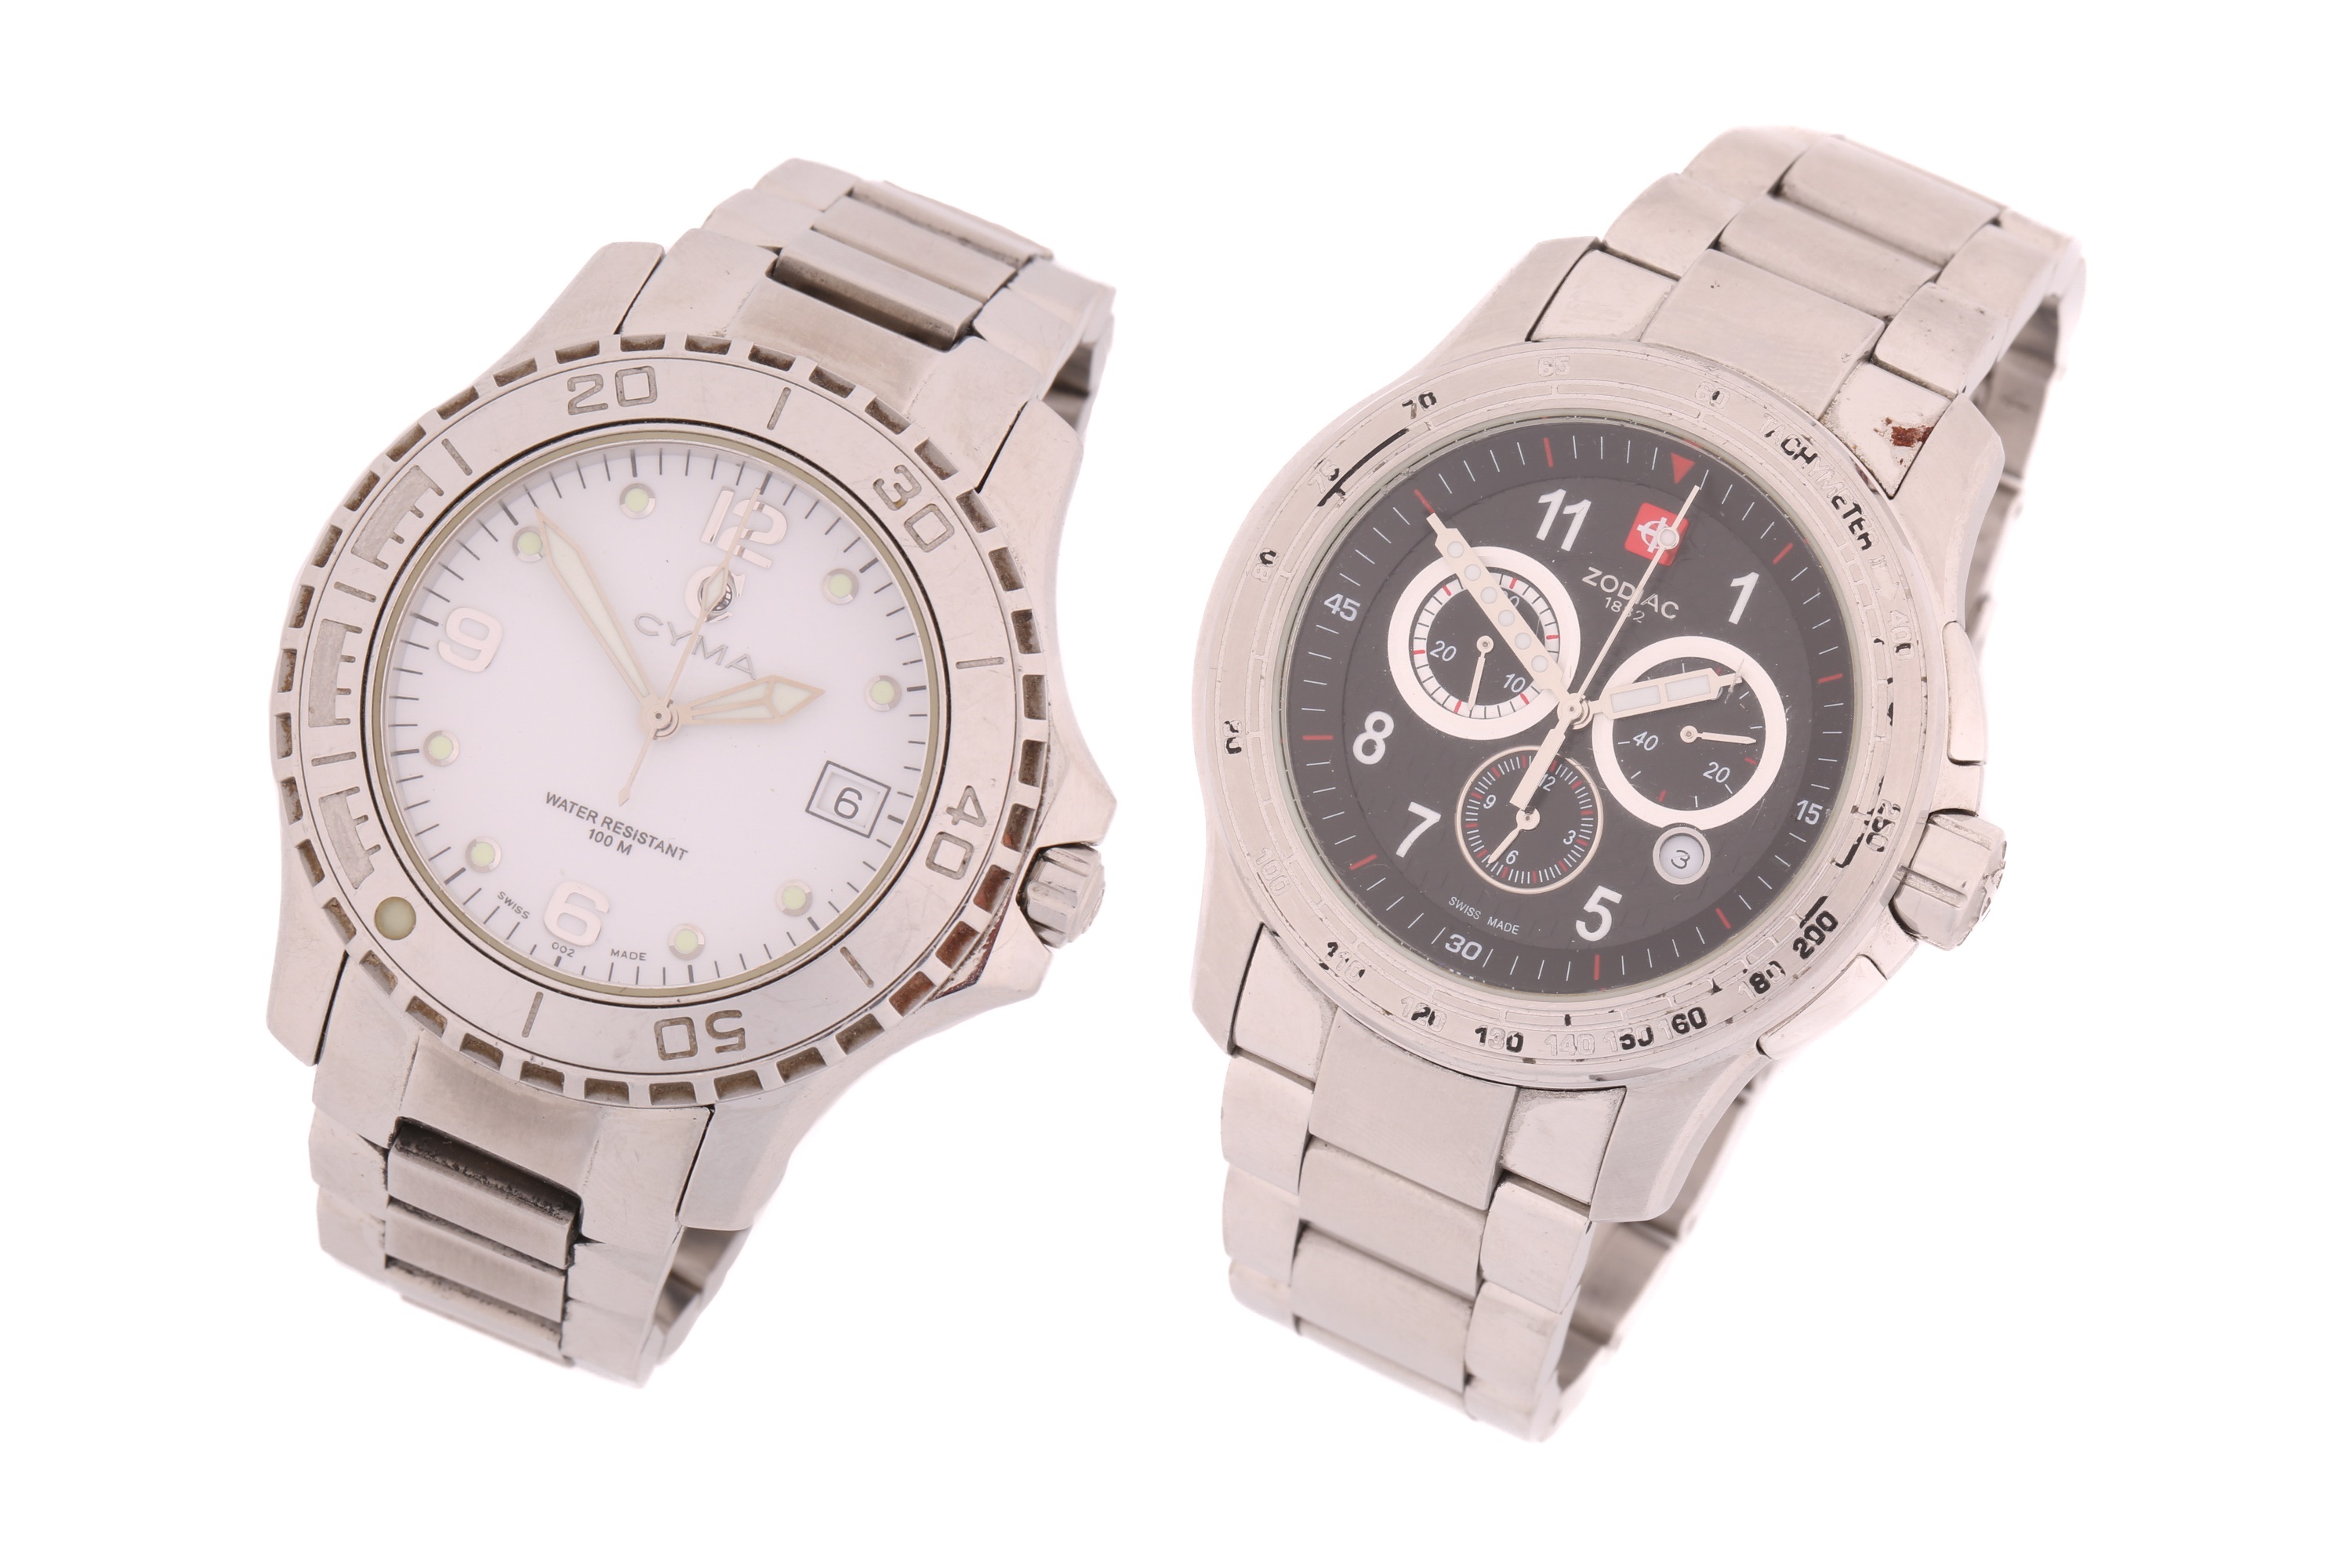 Lot 394 - A Zodiak Chronograph wristwatch and a Cyma